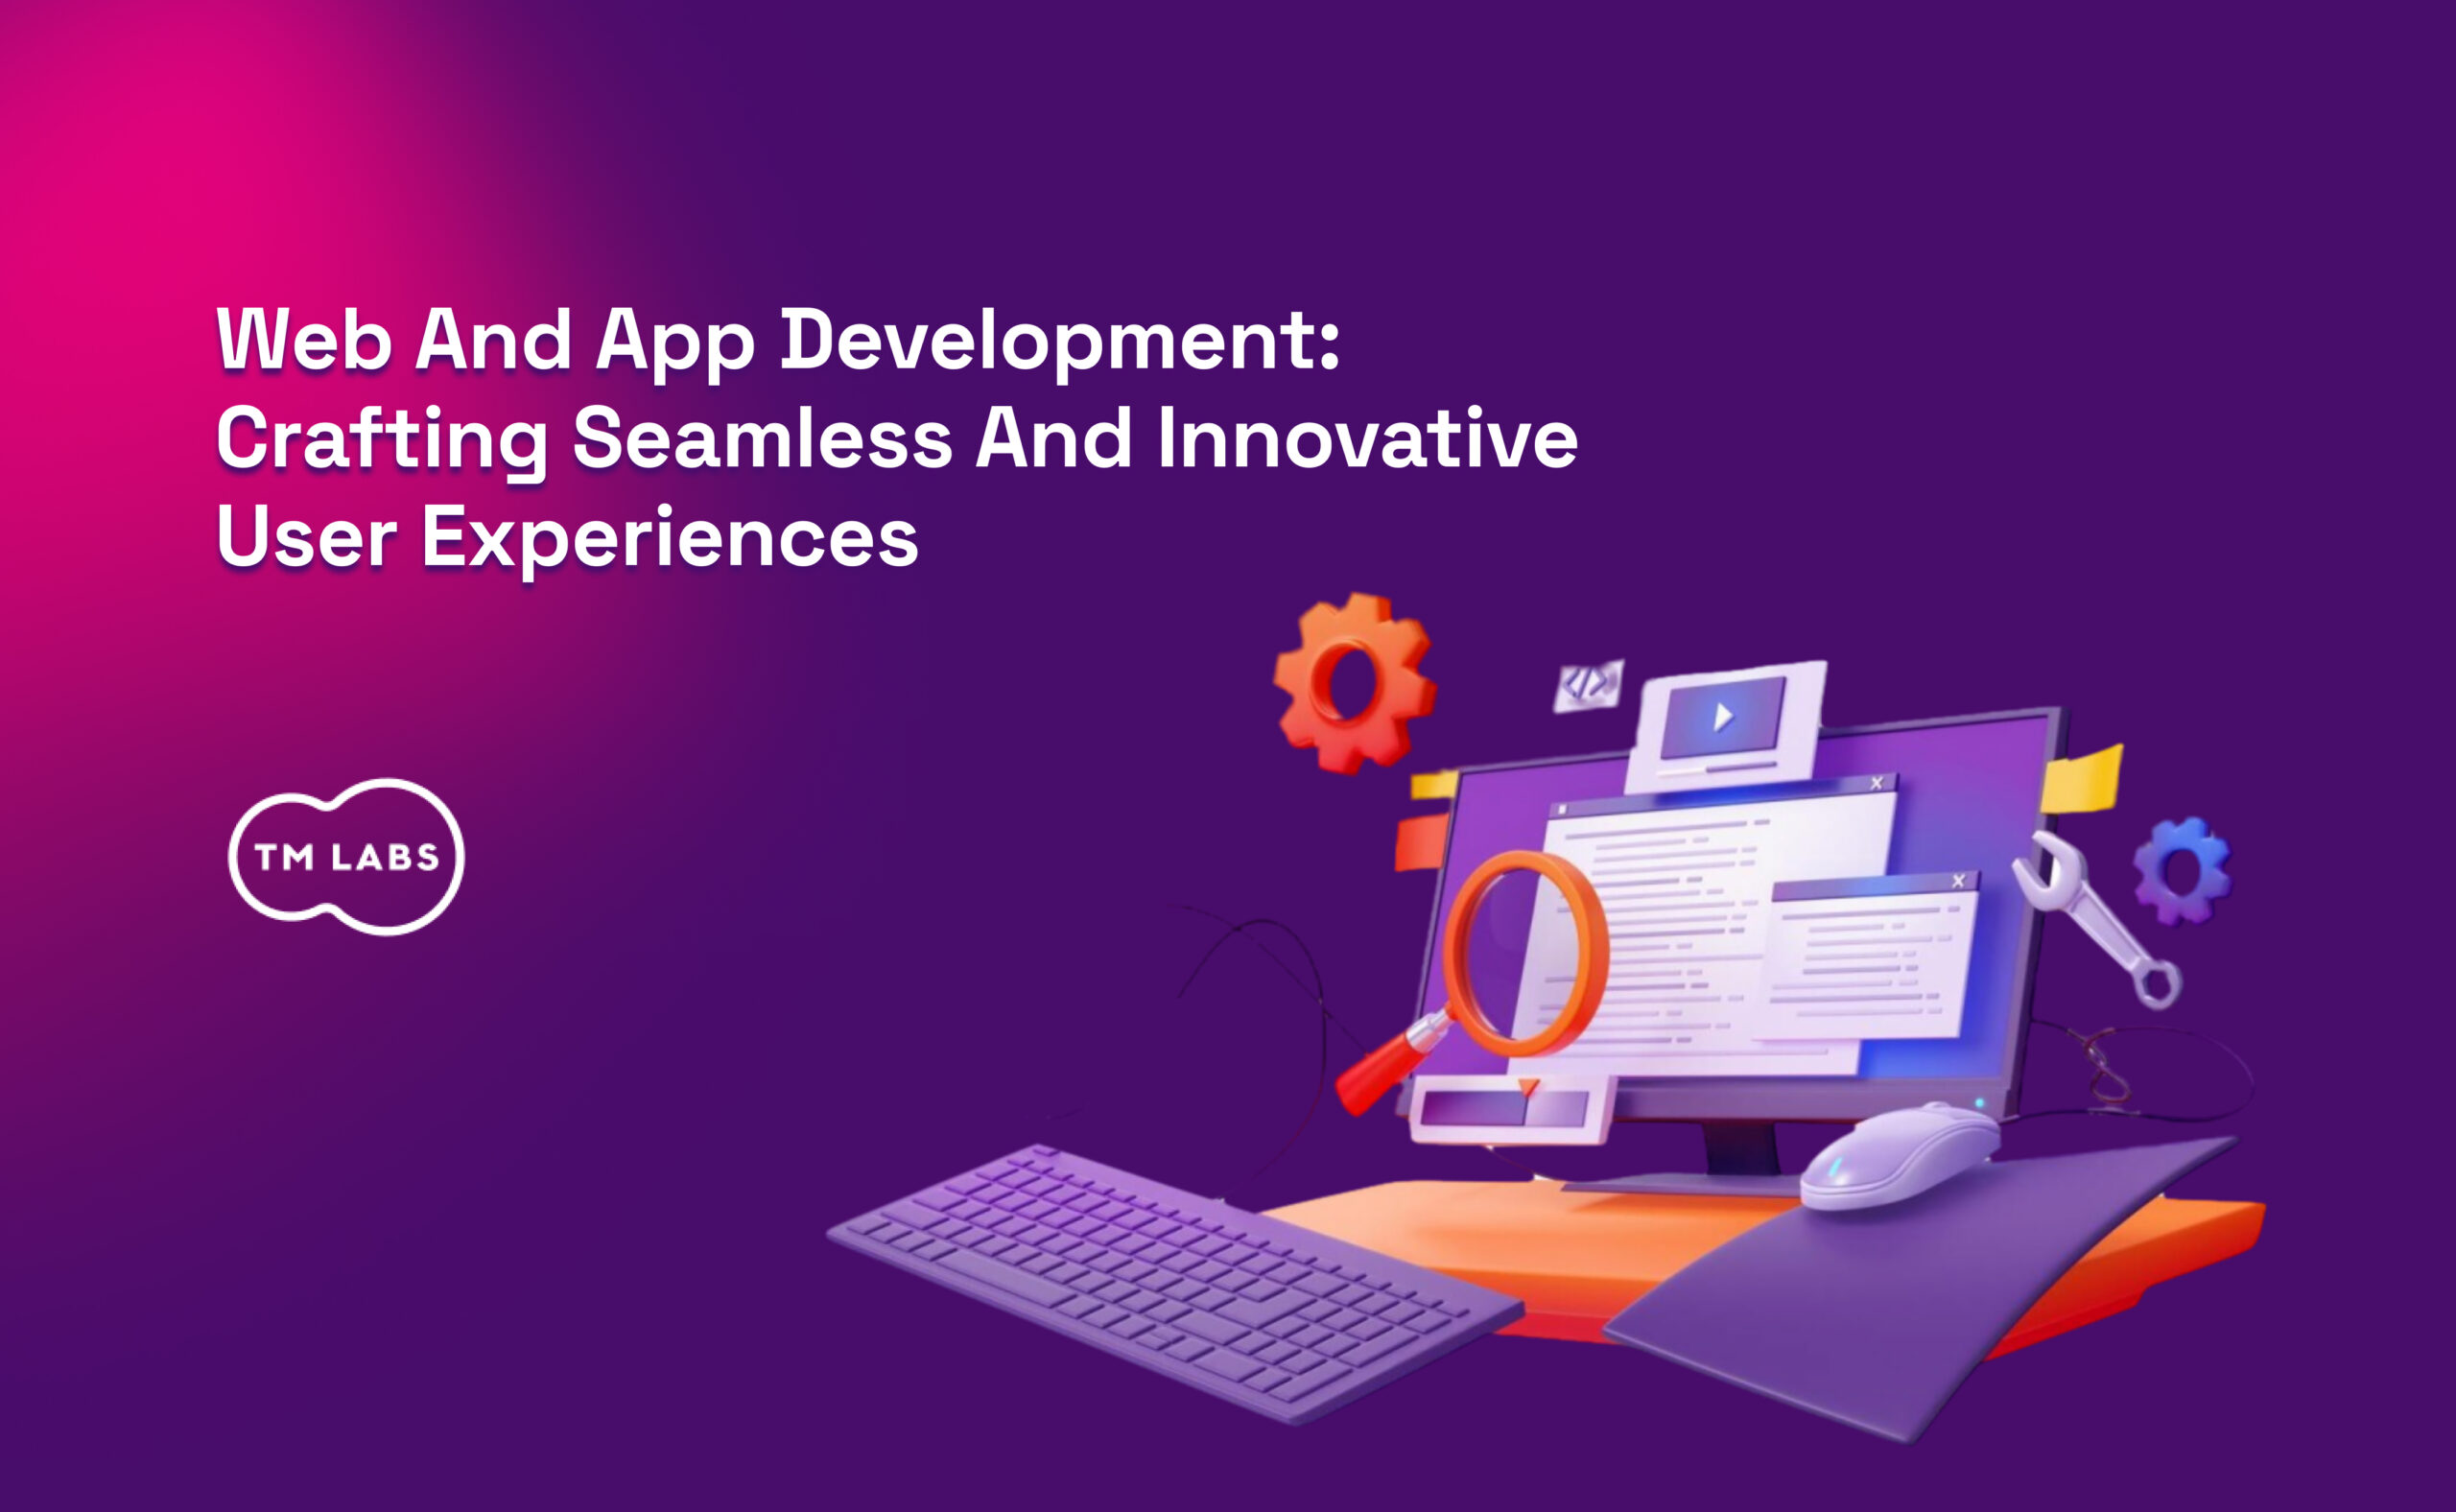 Web and App Development Services